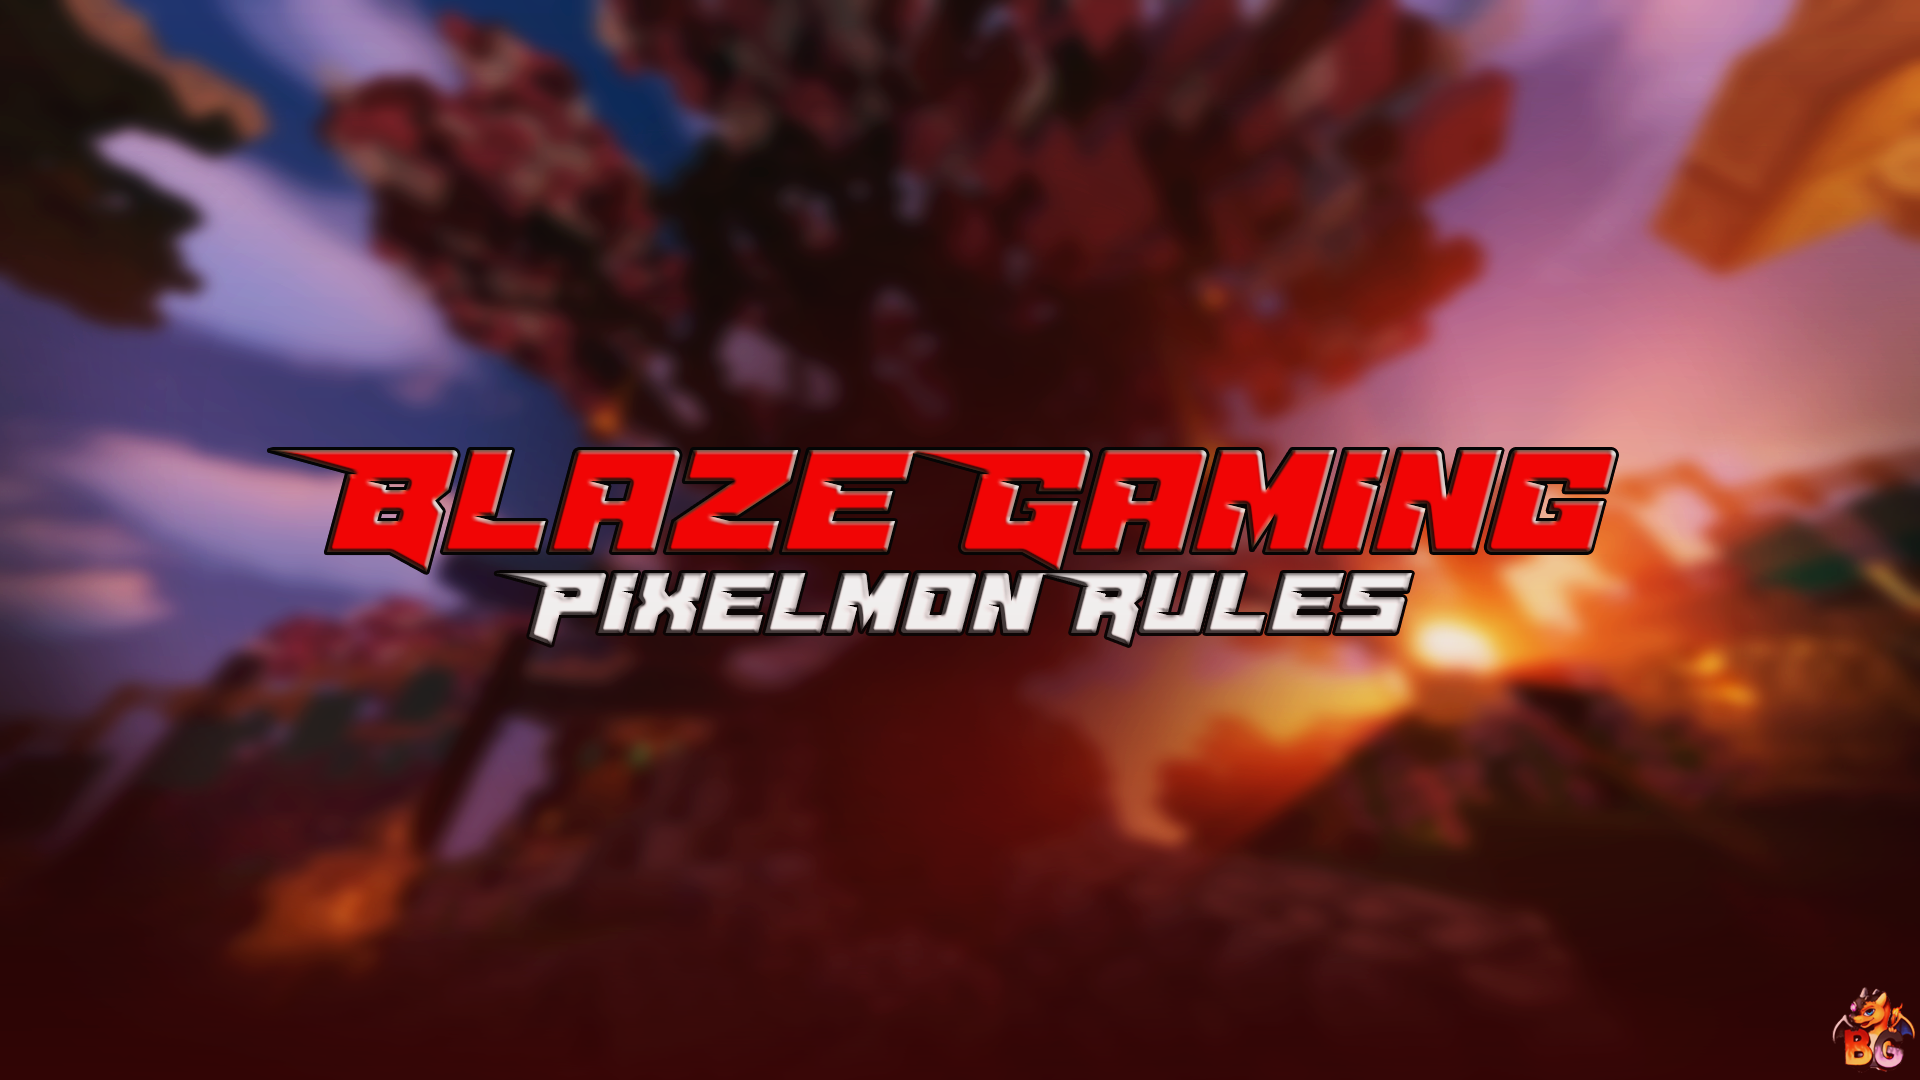 Pixelmon Rules